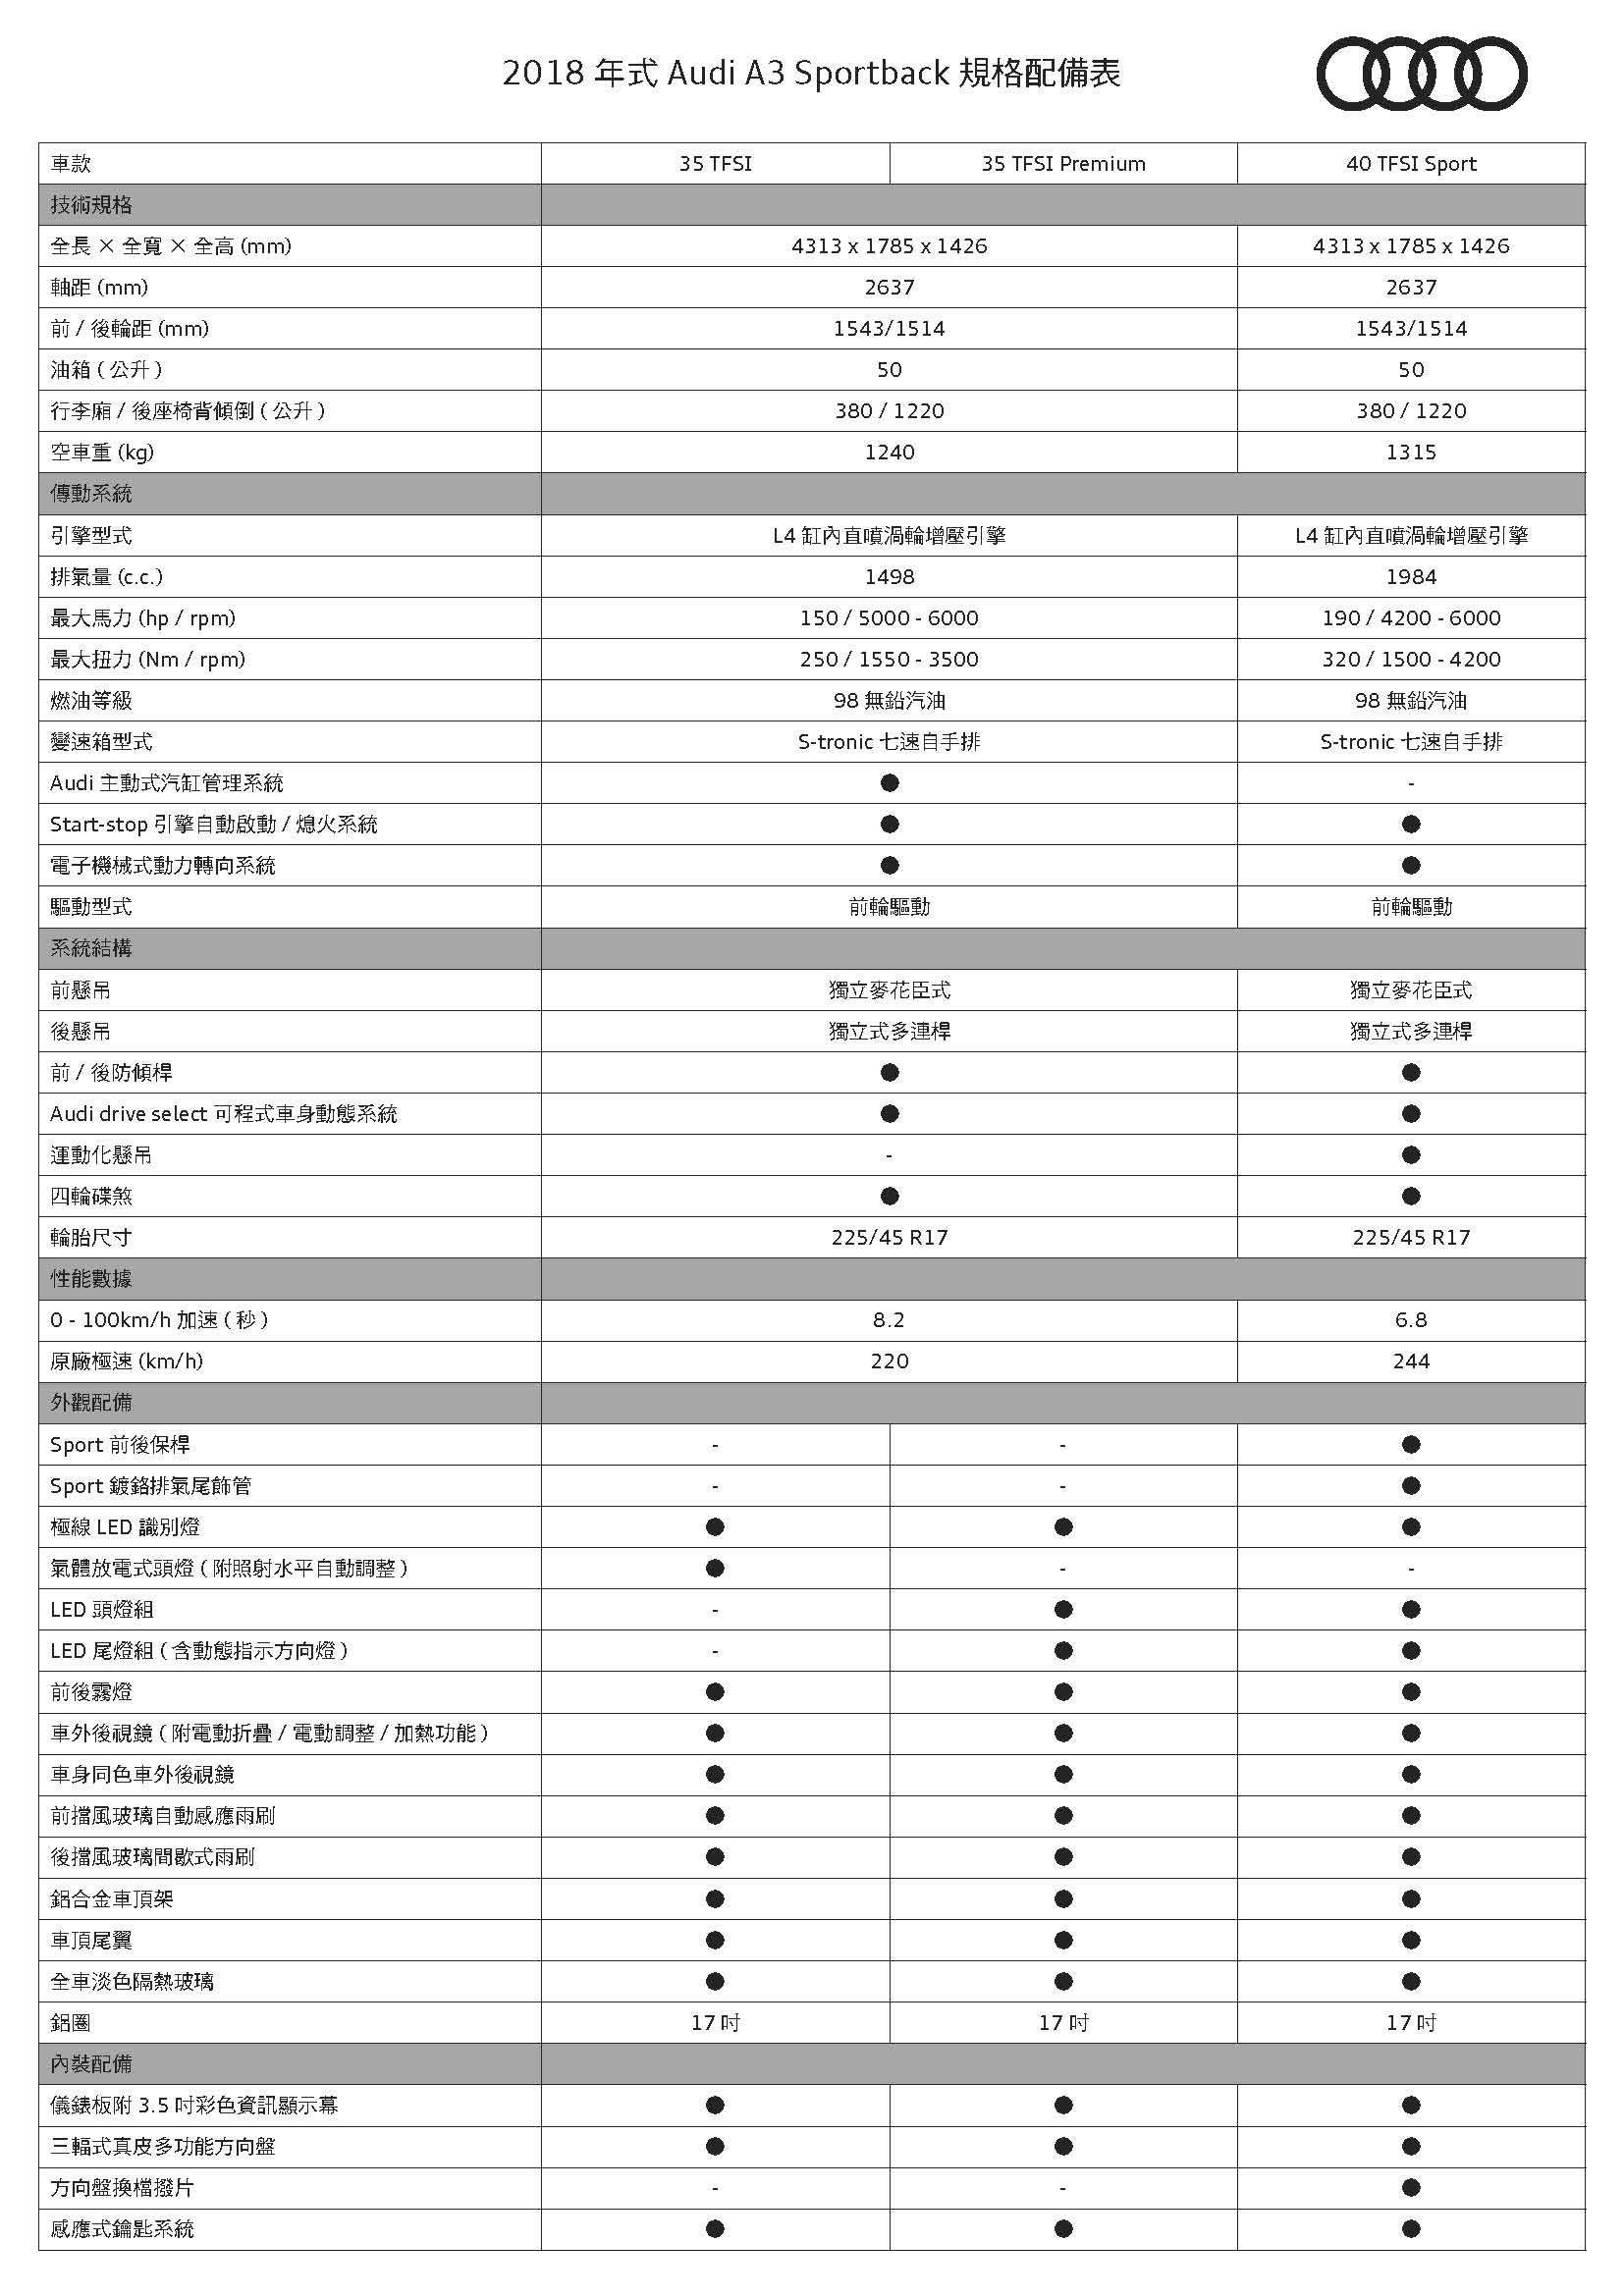 Audi A3 Sportback 規格配備表_頁面_1